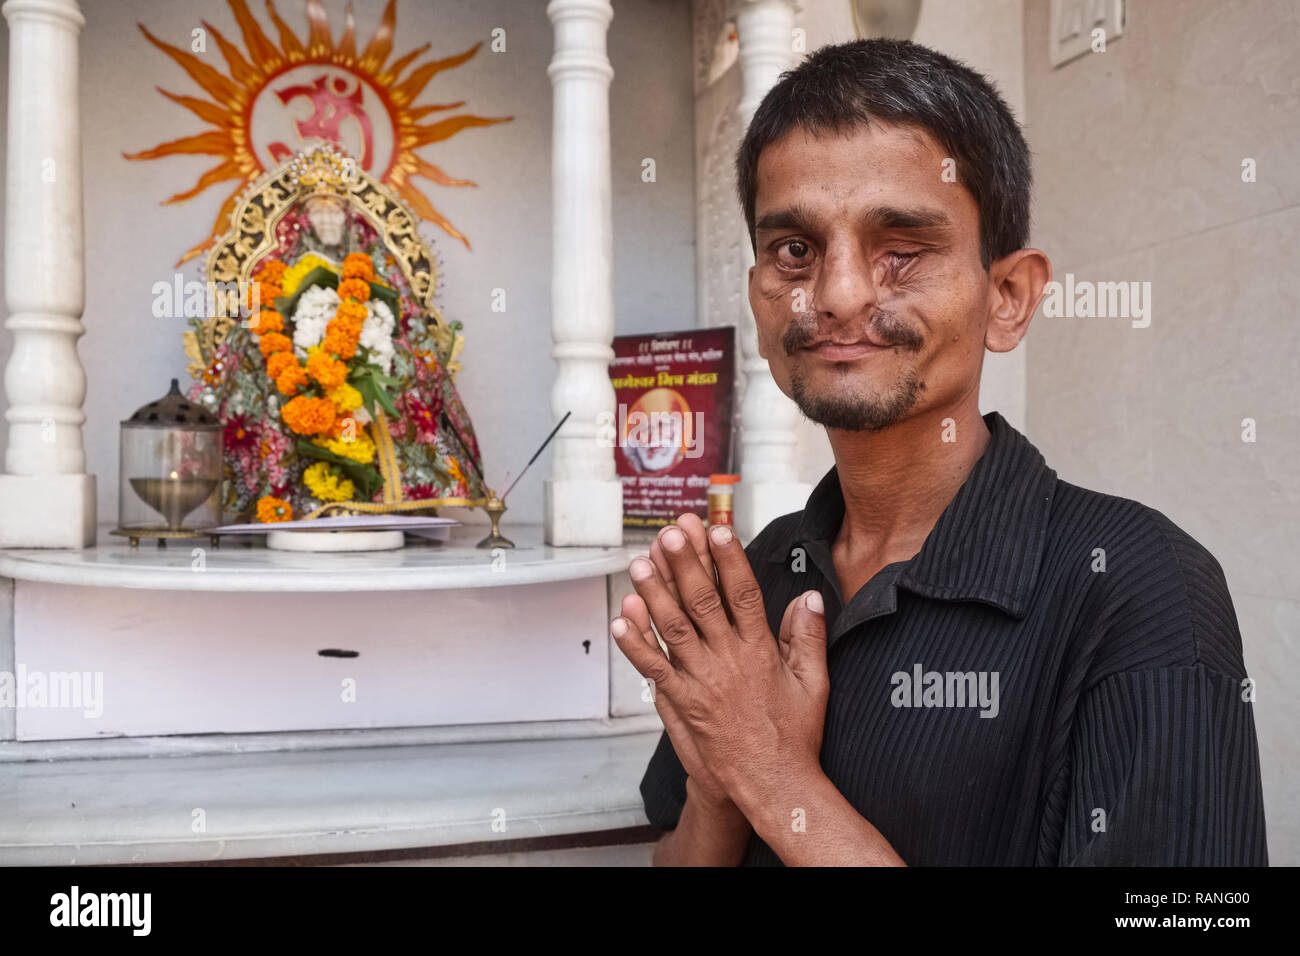 A victim of an acid attack praying at a shrine to Hindu saint Sai Baba, Mumbai, India Stock Photo